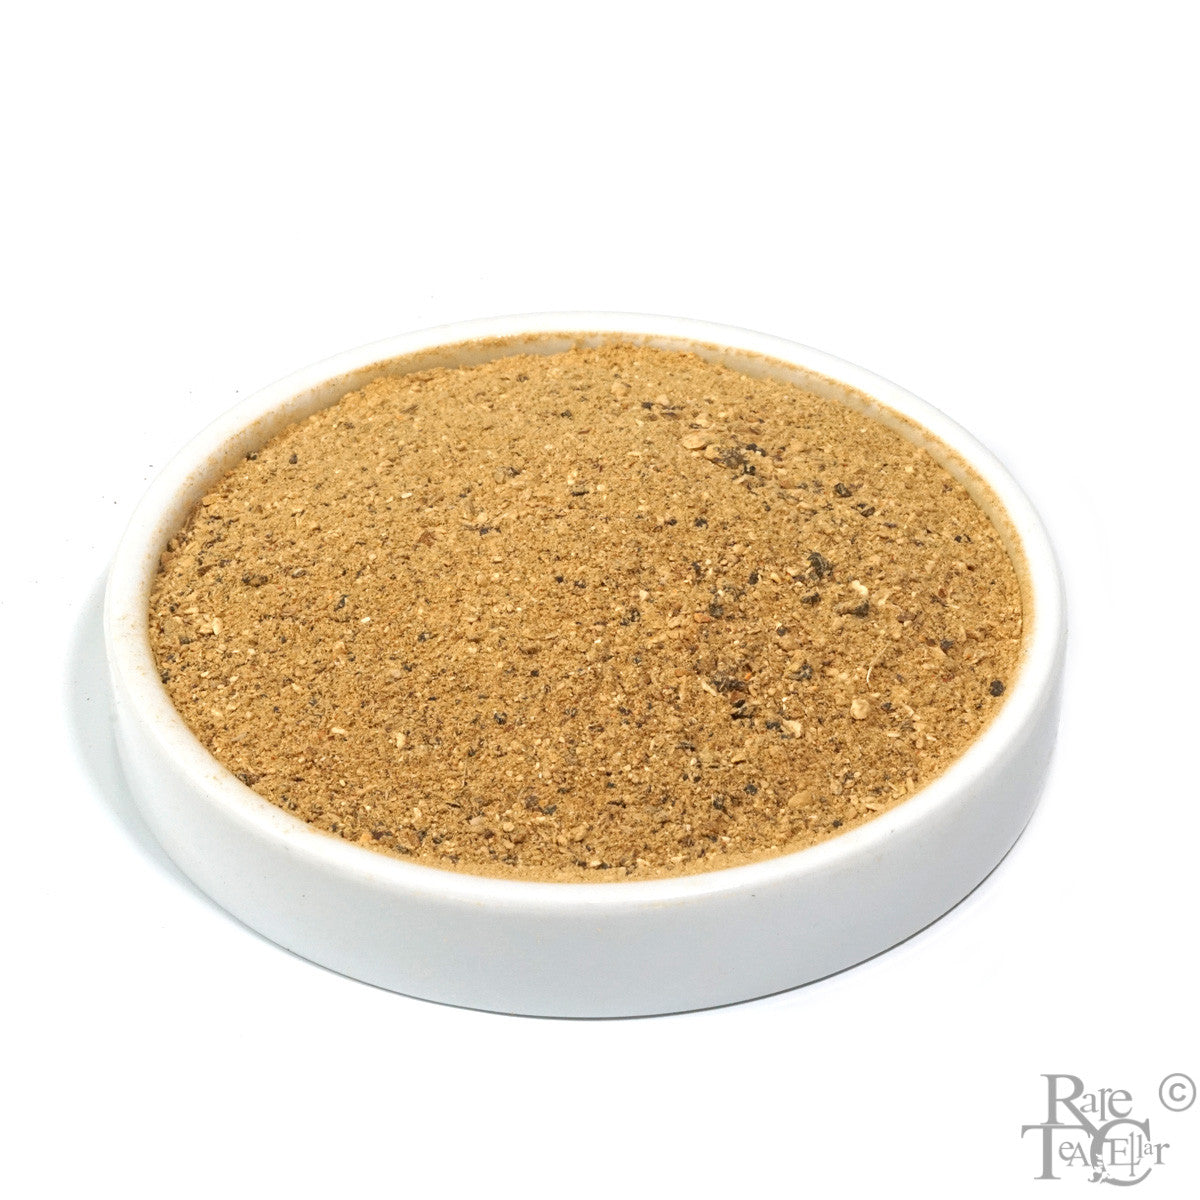 Porcini Powder by Tartuflanghe, 1.76 oz (50 g)